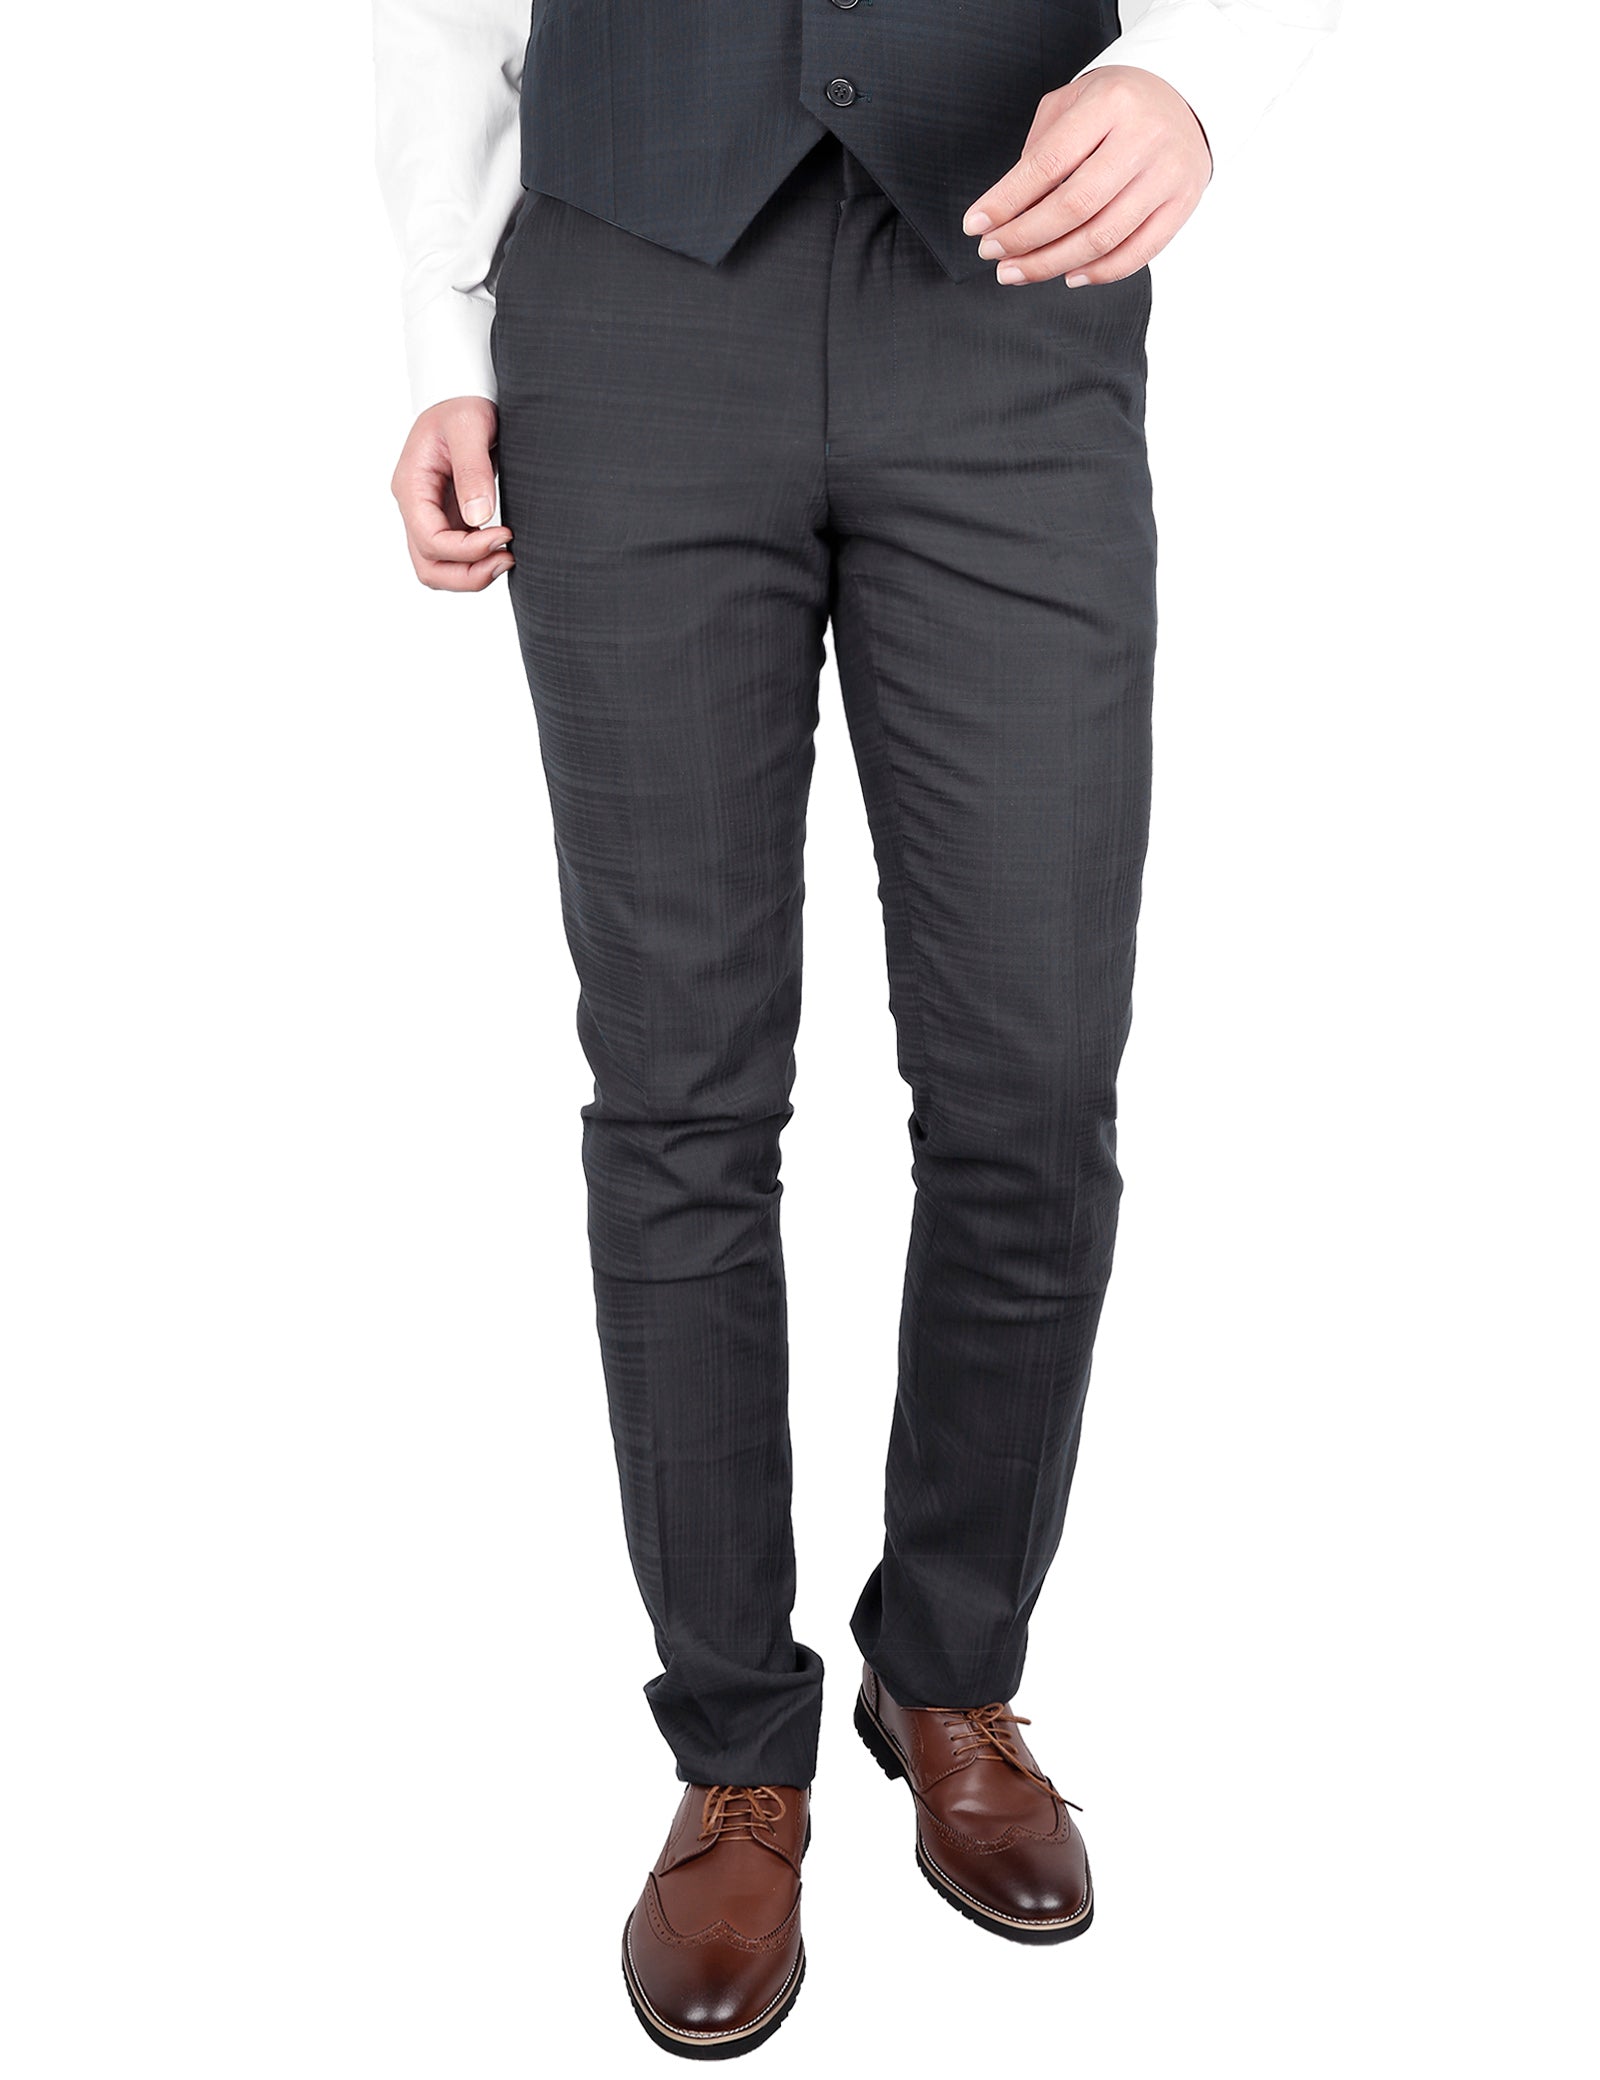 Men Dress Pants,Mens Casual Plaid Stretch Flat-Front Skinny Business Pencil  Long Pants Trousers with Pockets - Walmart.com